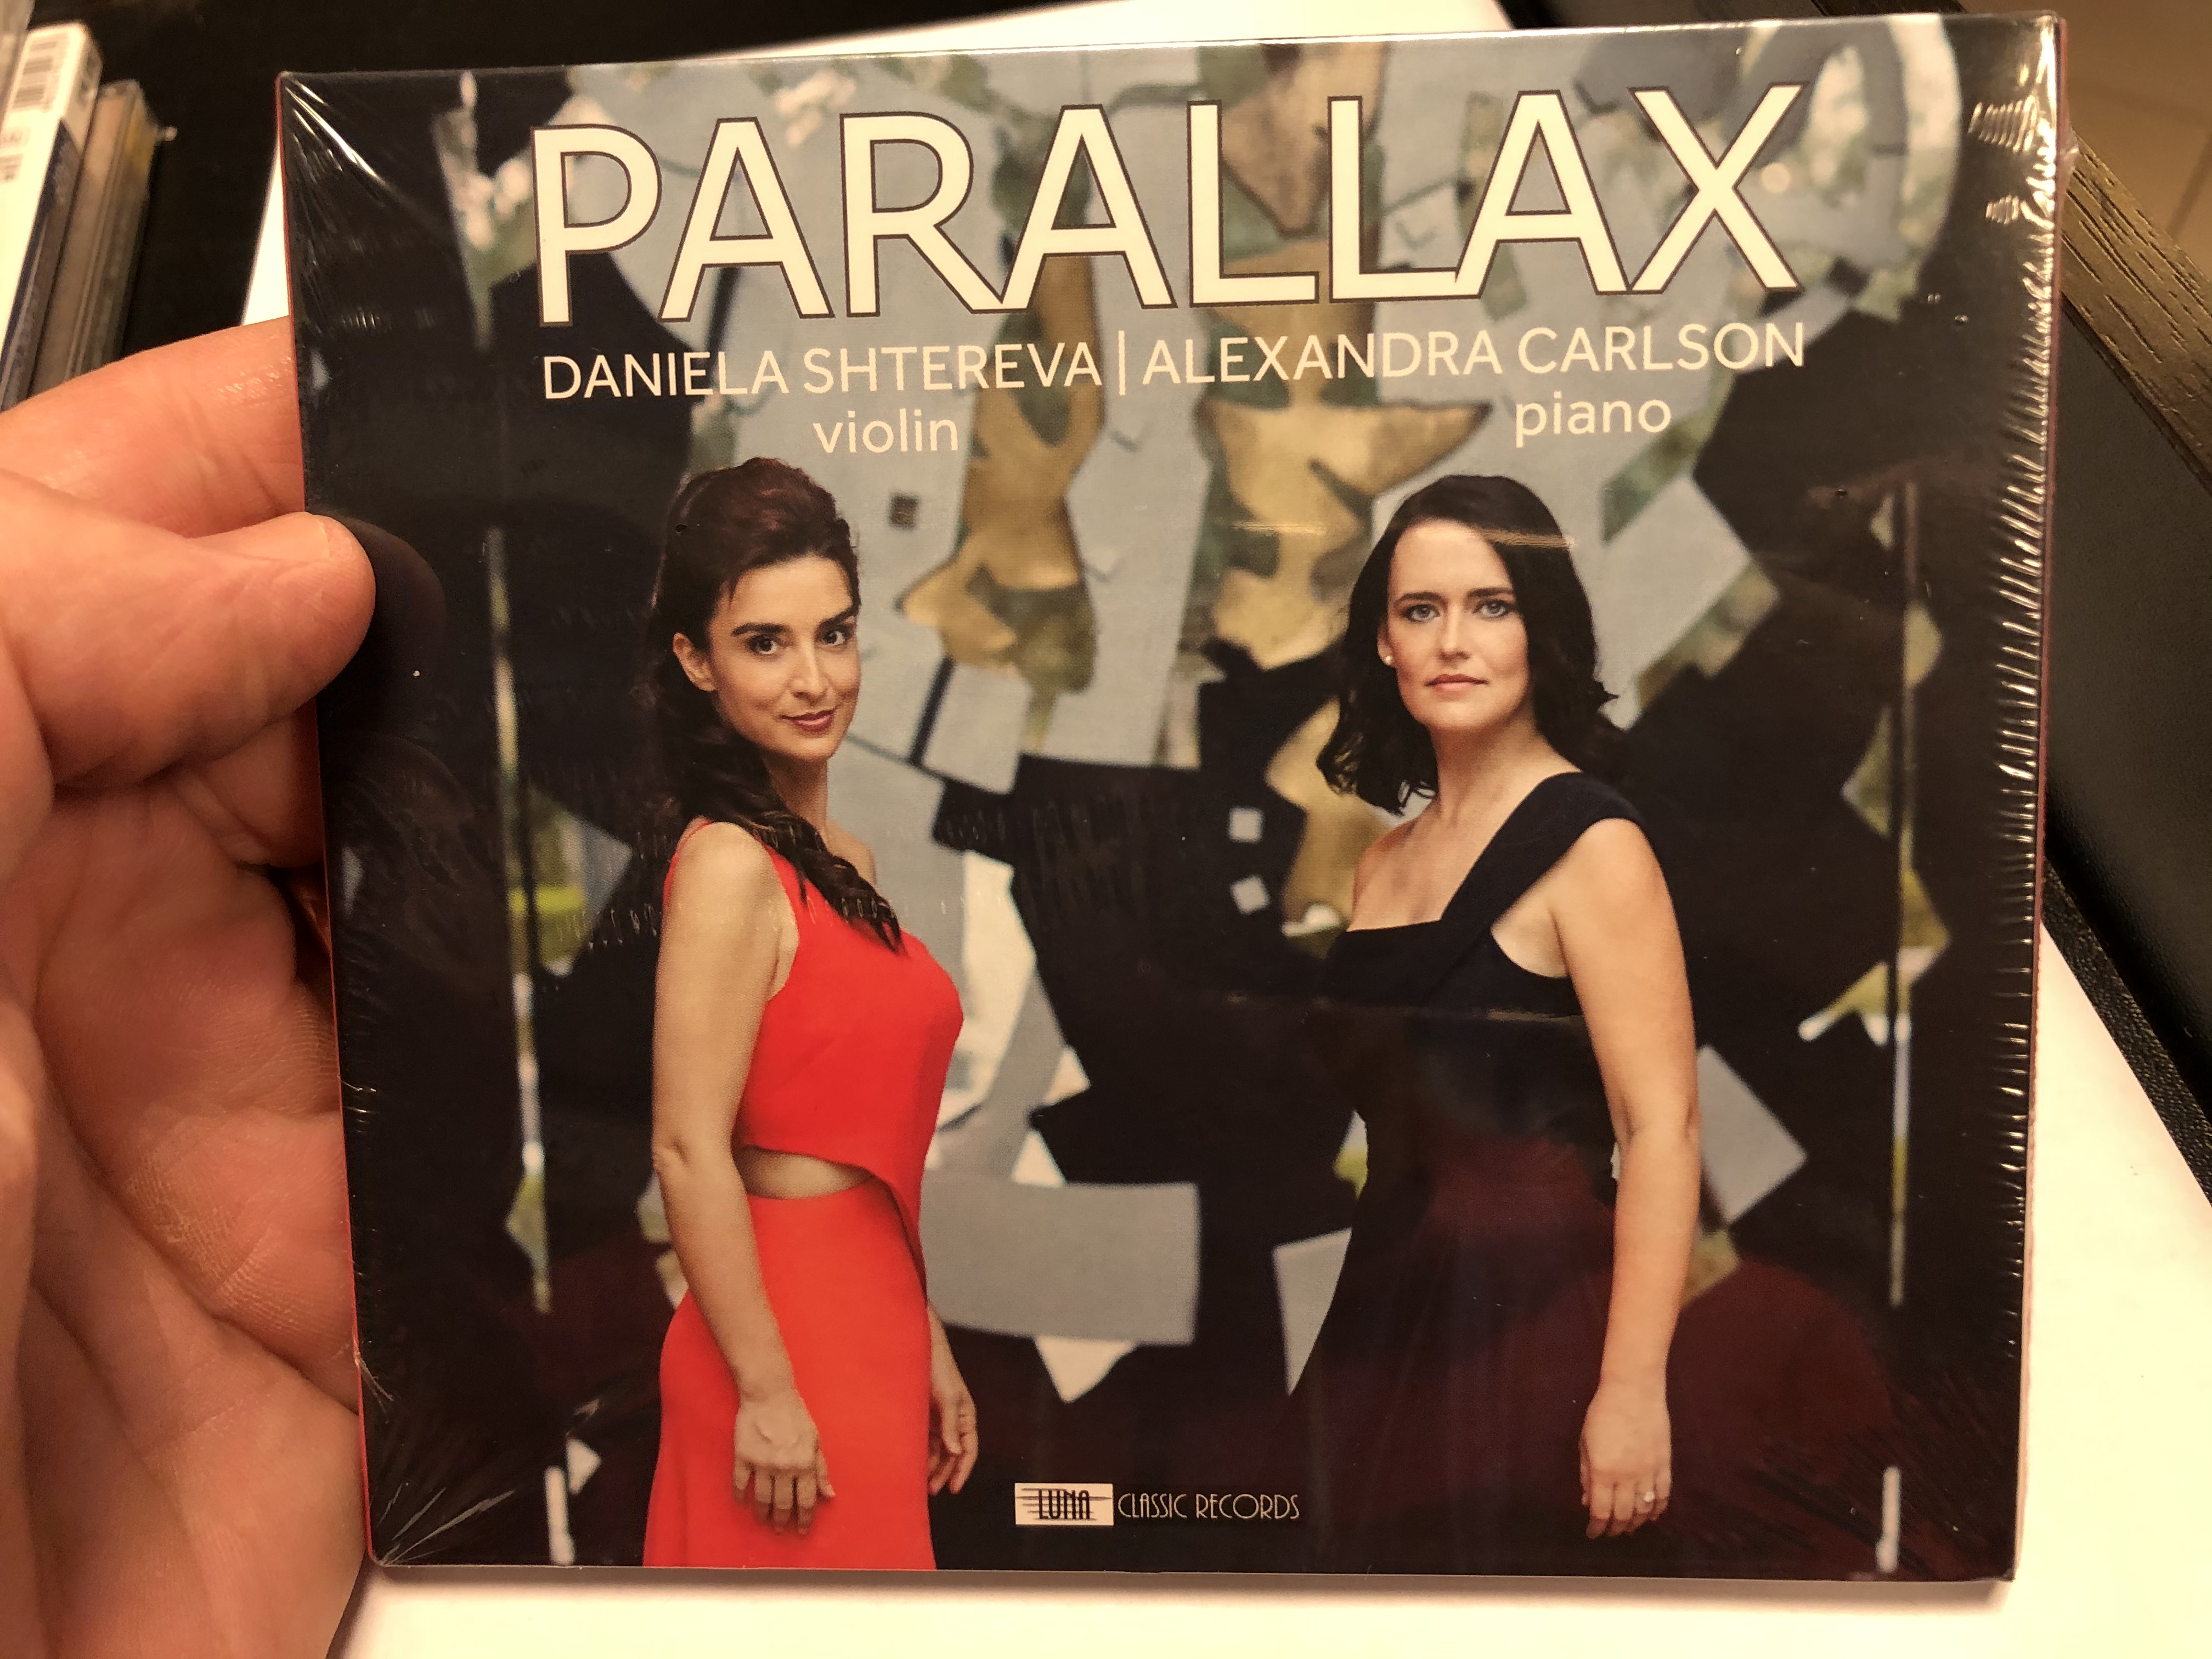 parallax-daniela-shtereva-violin-alexandra-carlson-piano-luna-classic-records-audio-cd-2019-194660093080-1-.jpg